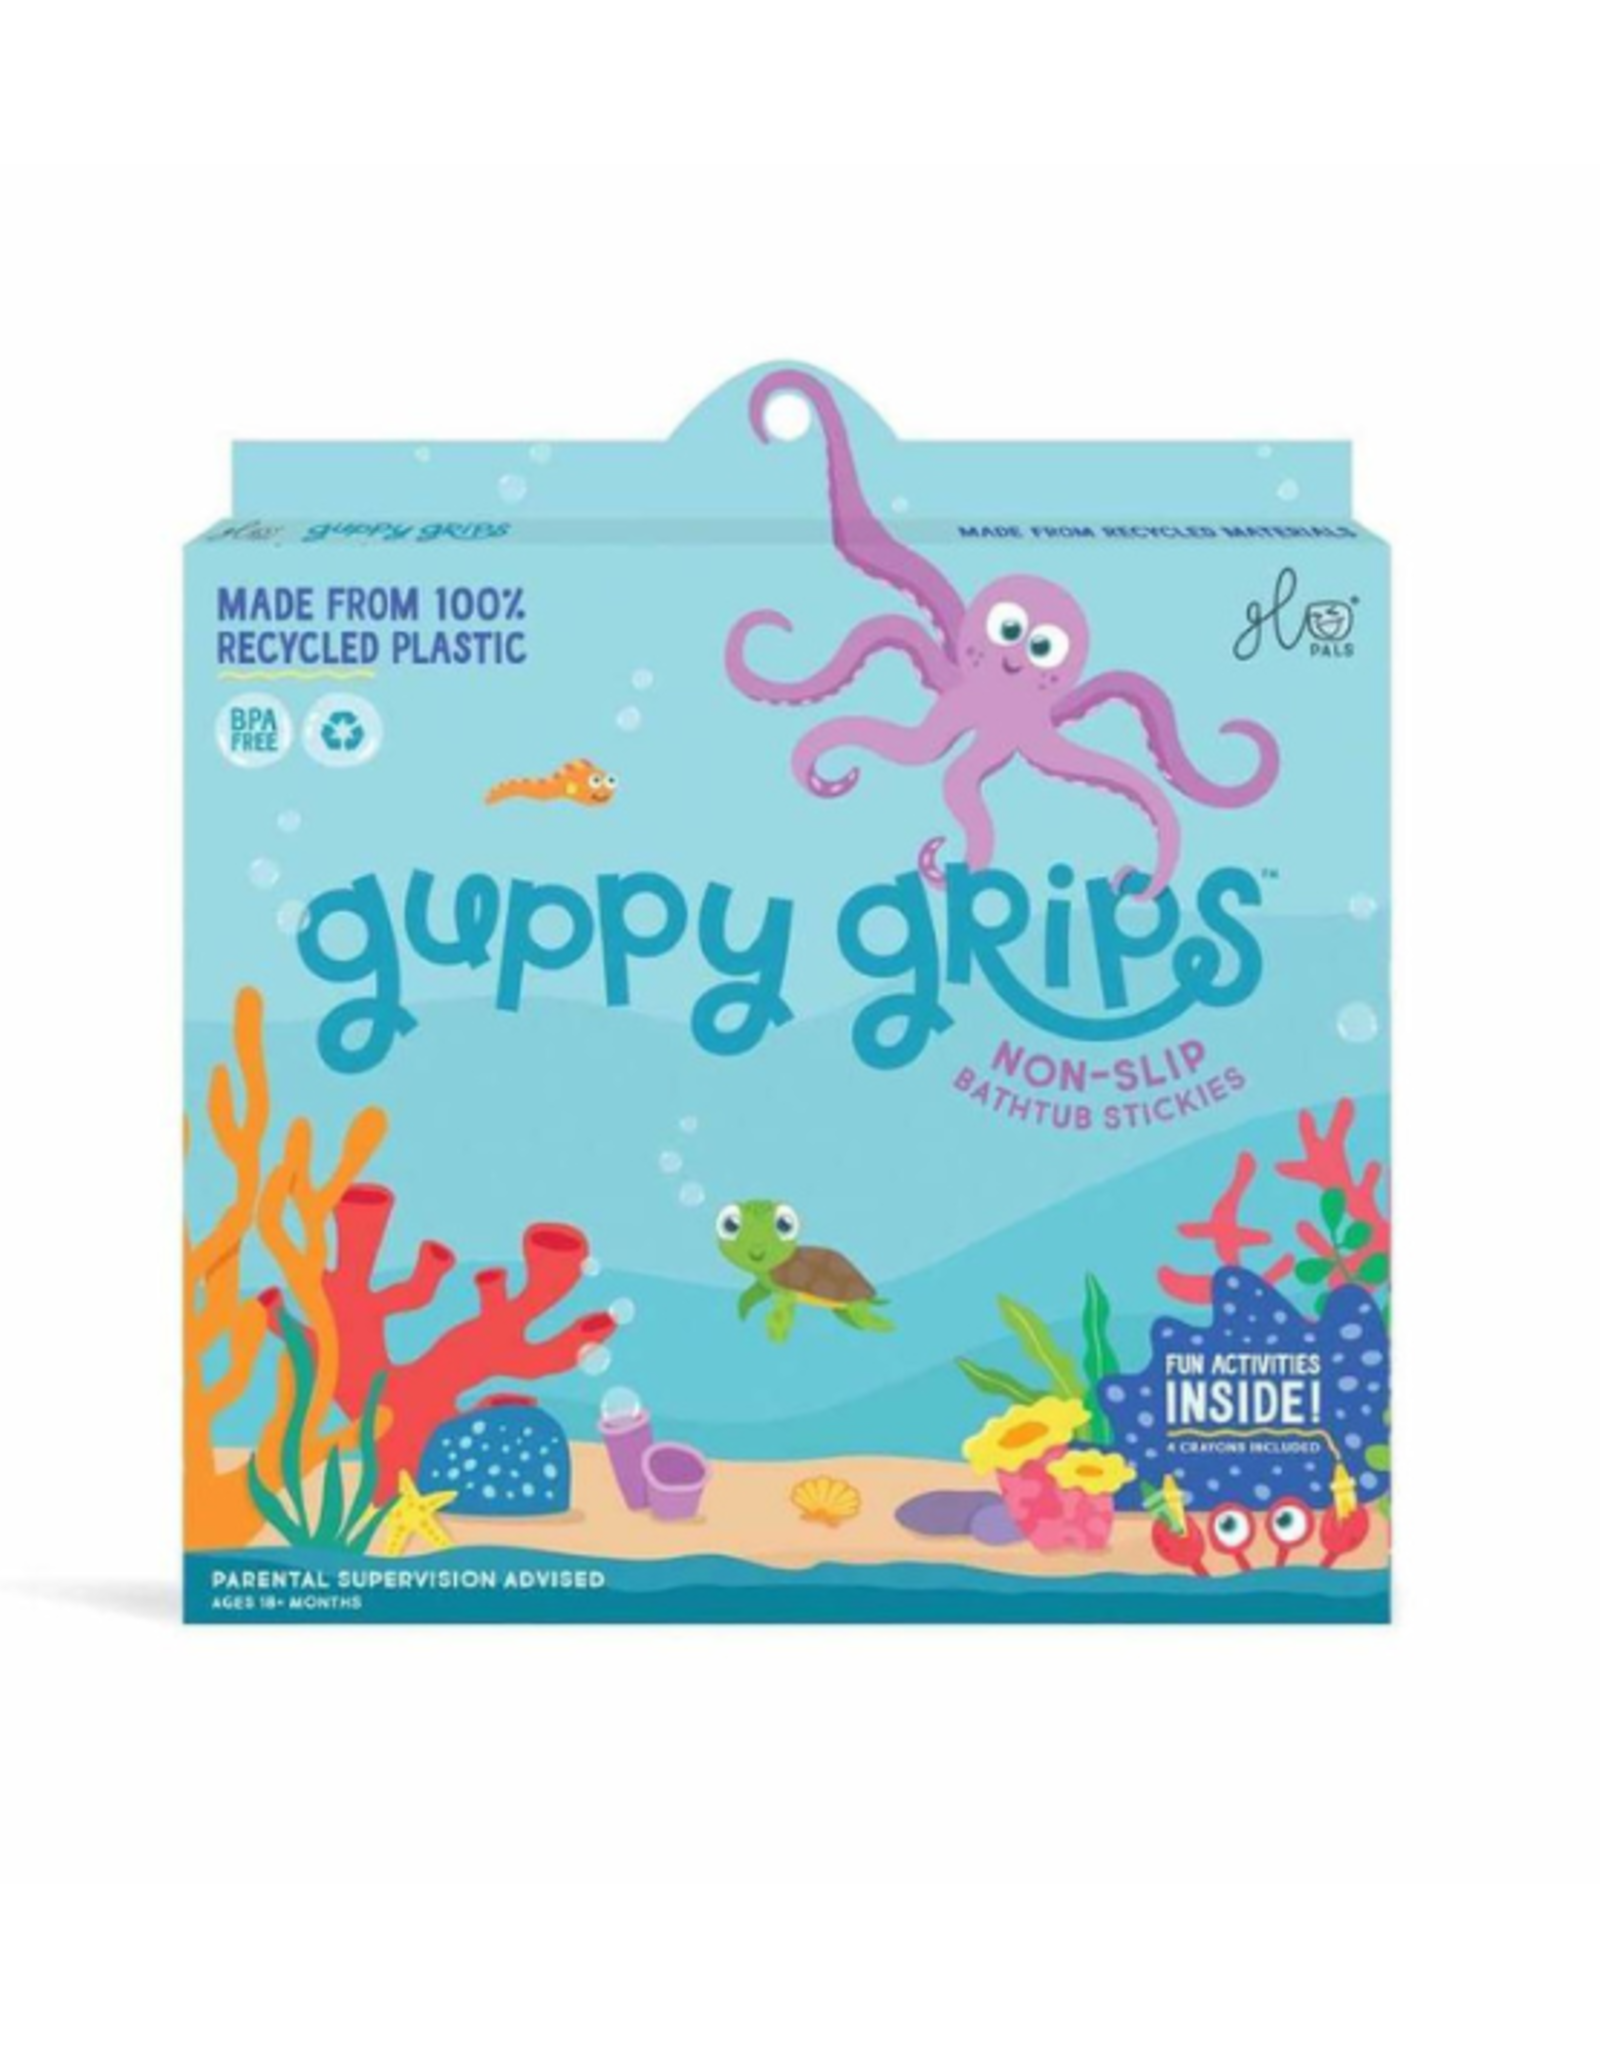 Glo Pals - Bath Grips (Guppy Grips)